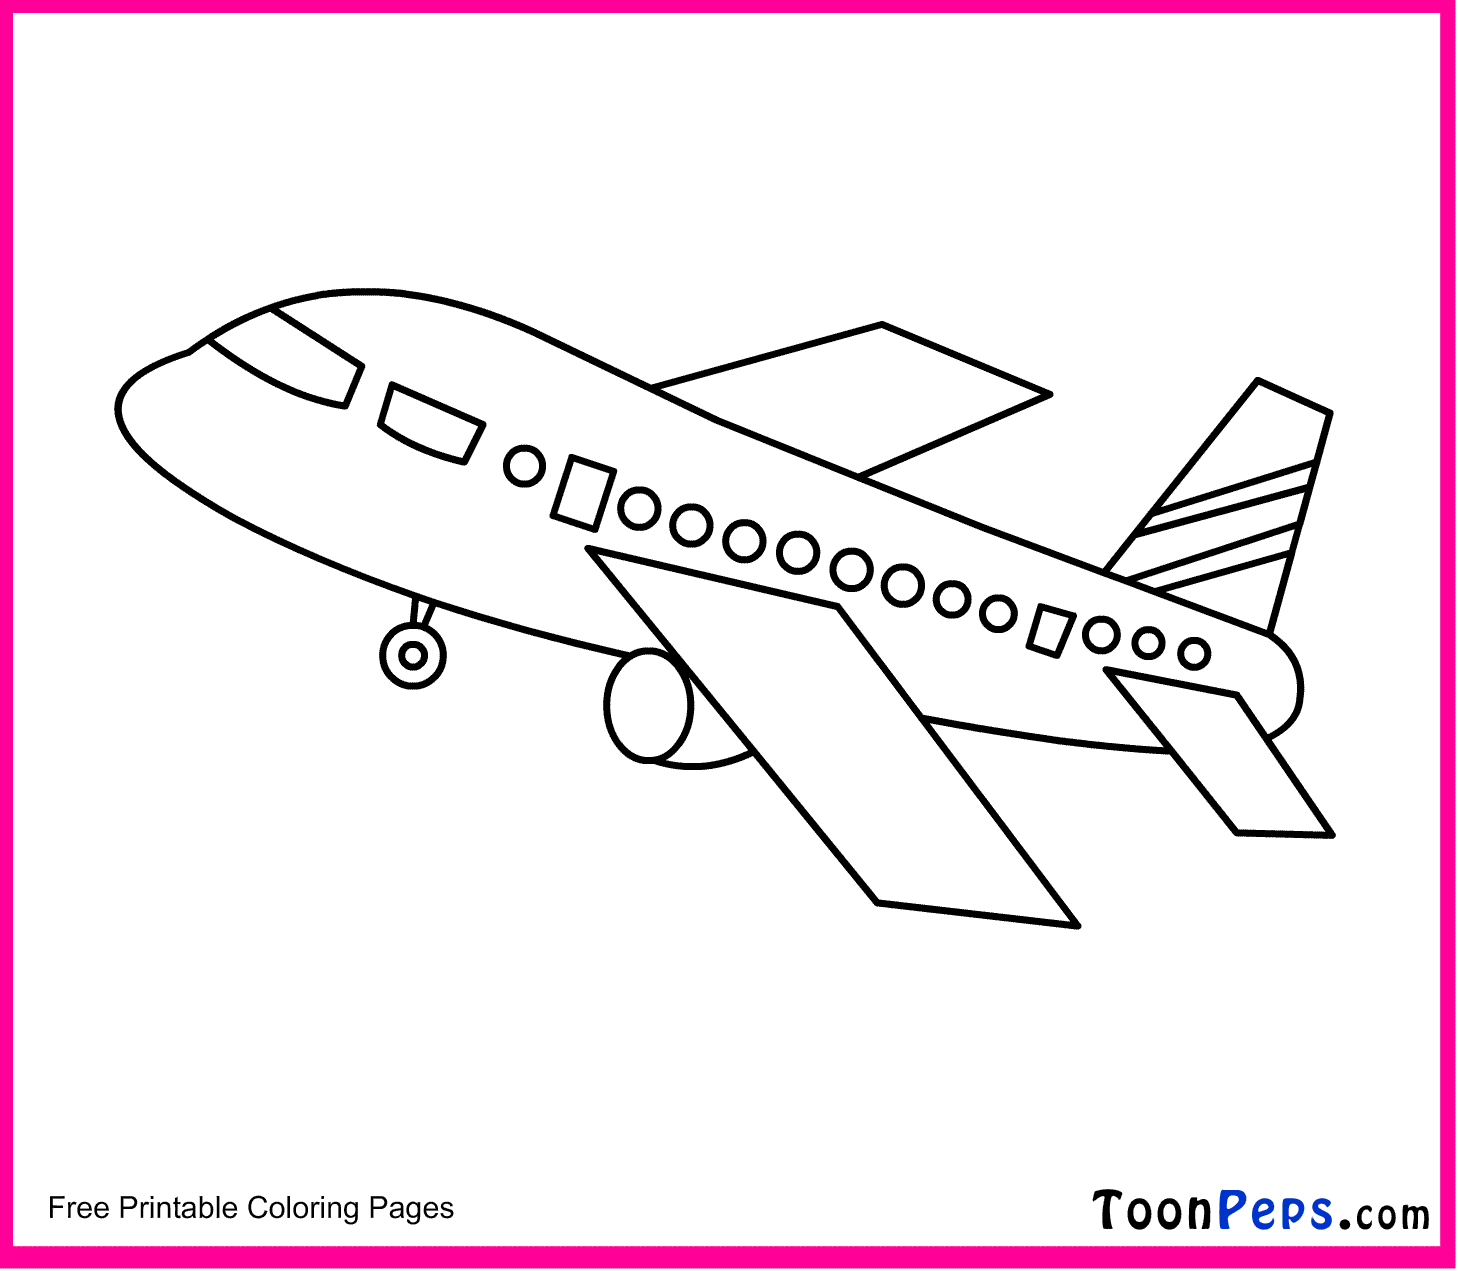 AEROPLANE/ how to draw aeroplane/ easy aeroplane drawing/ aeroplane drawing  for kids/ new drawing - YouTube